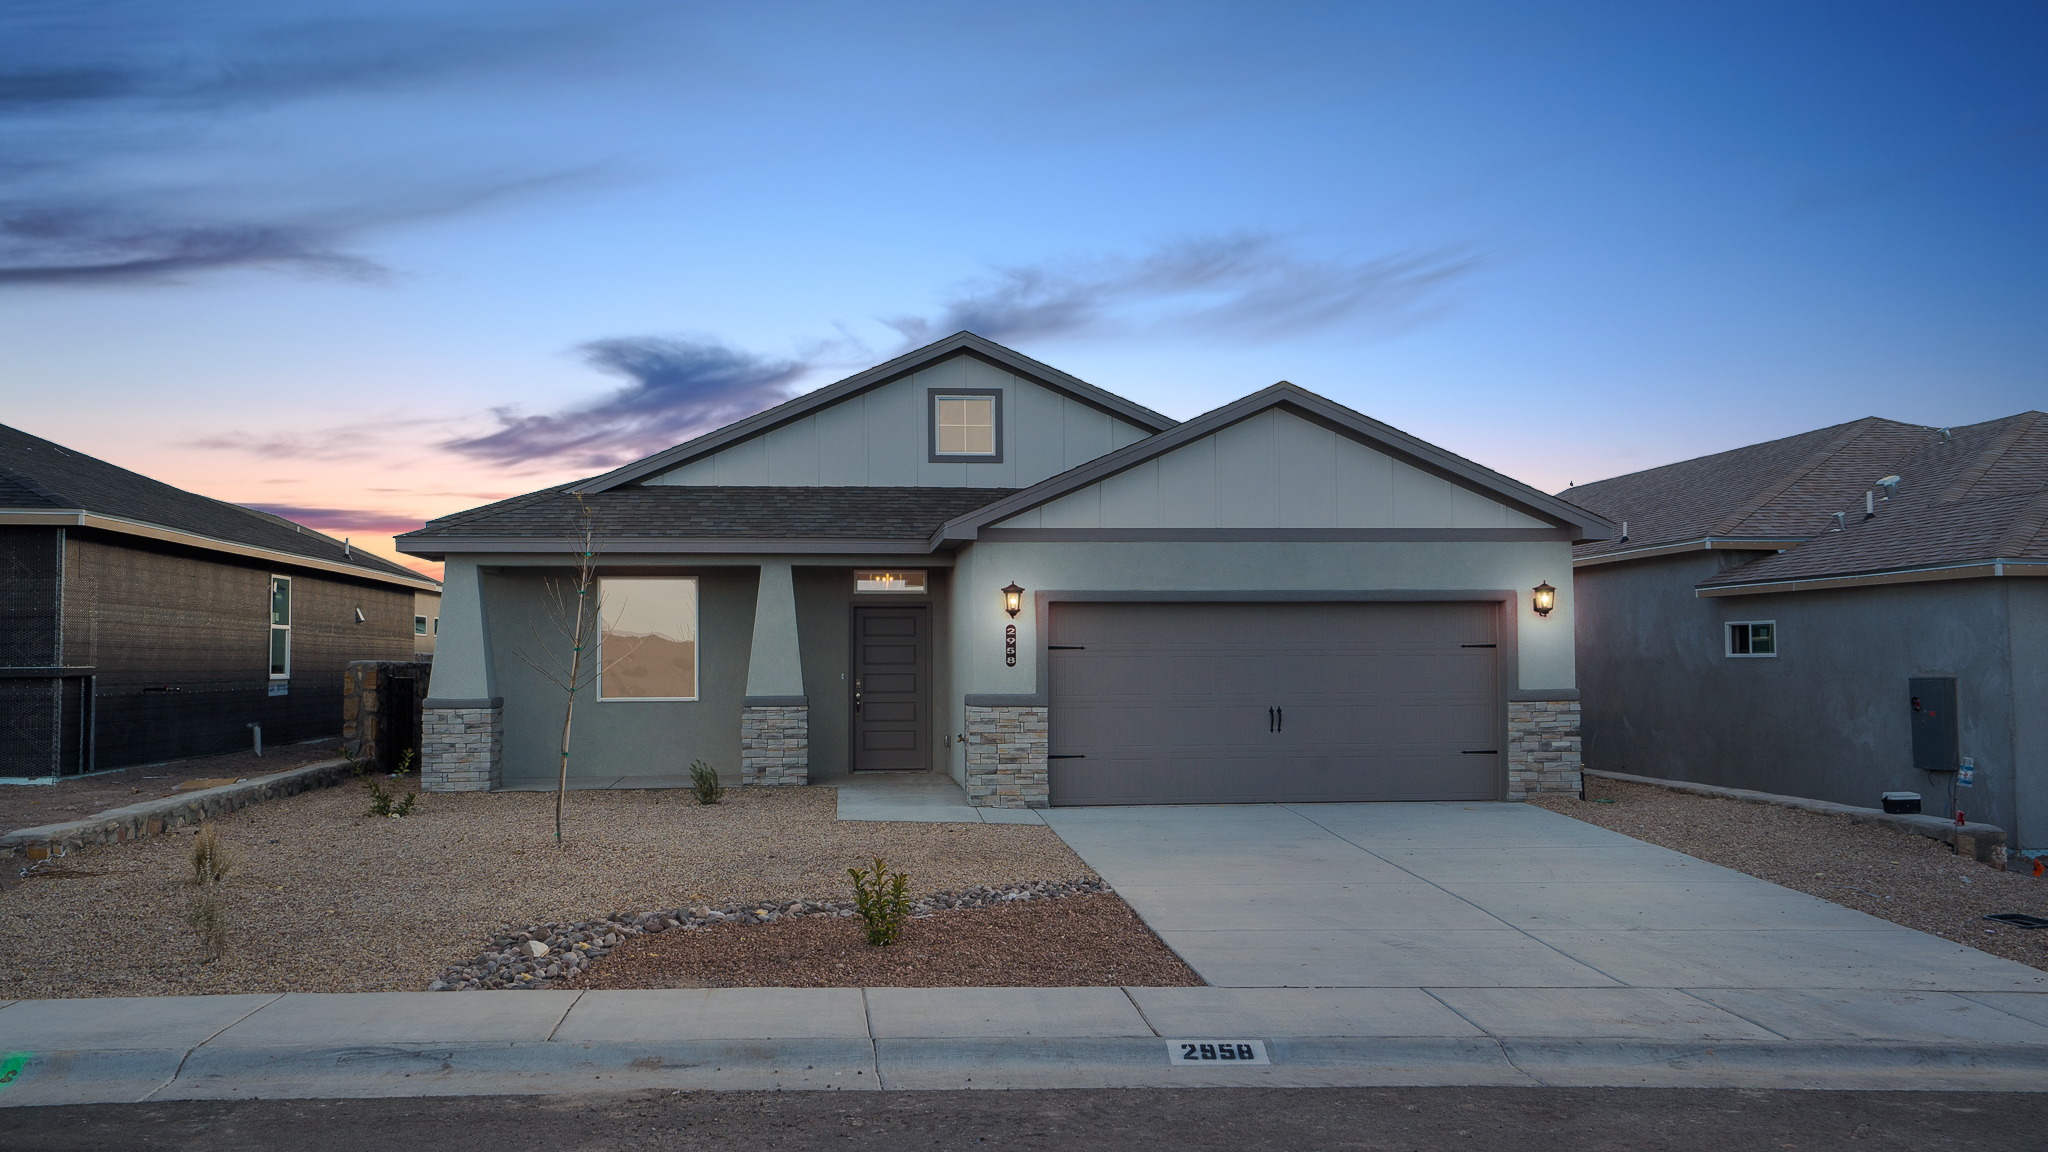 New Home Construction Albuquerque: Top 8 Secrets to New Home Construction